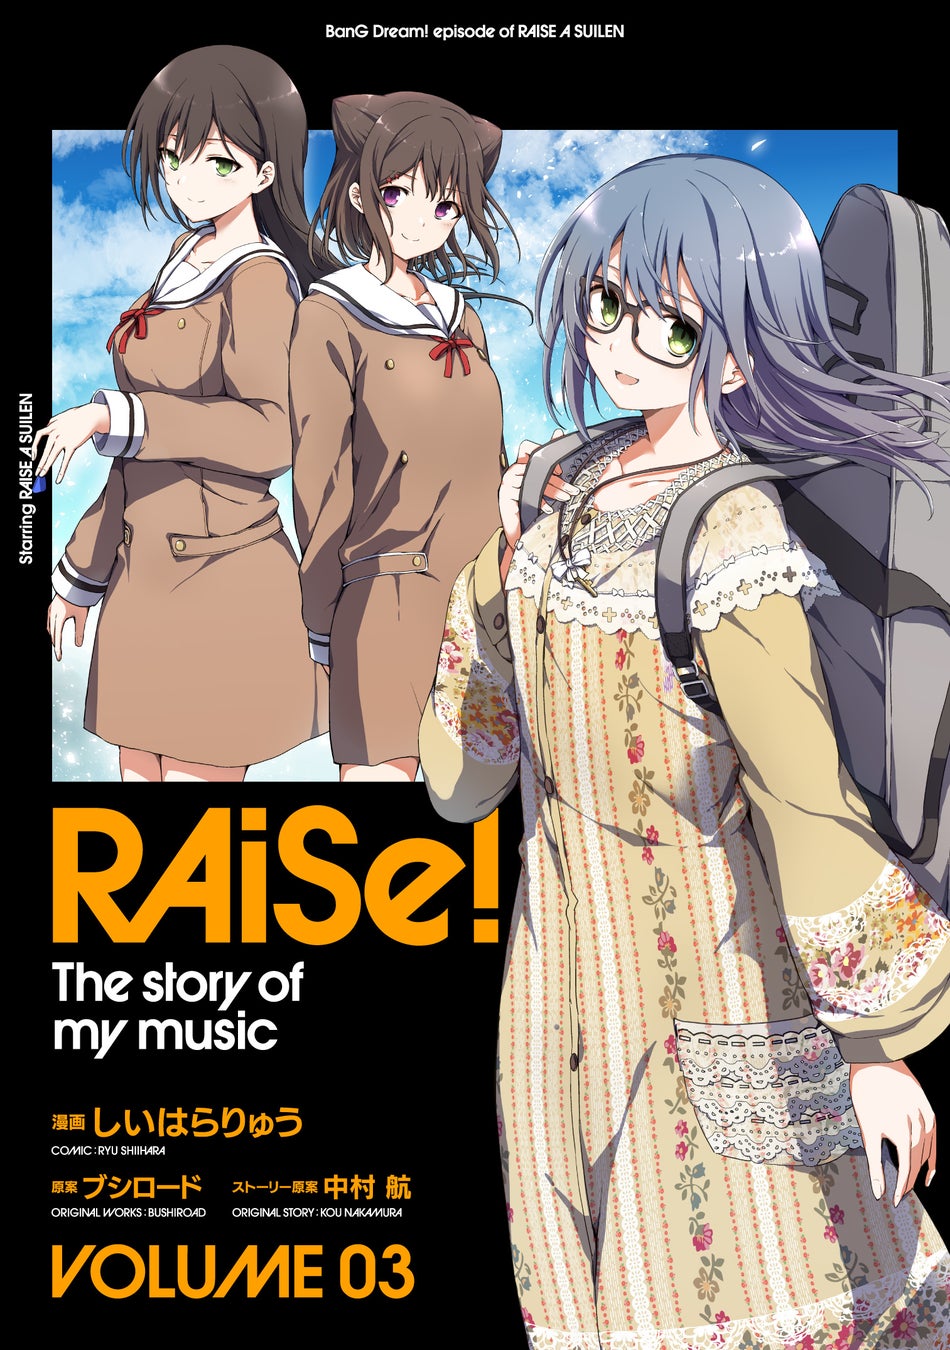 RAISE A SUILENの結成秘話を描く「BanG Dream!」公式コミカライズ『RAiSe! The story of my music』第3巻が明日１月6日(土)より配信開始!!